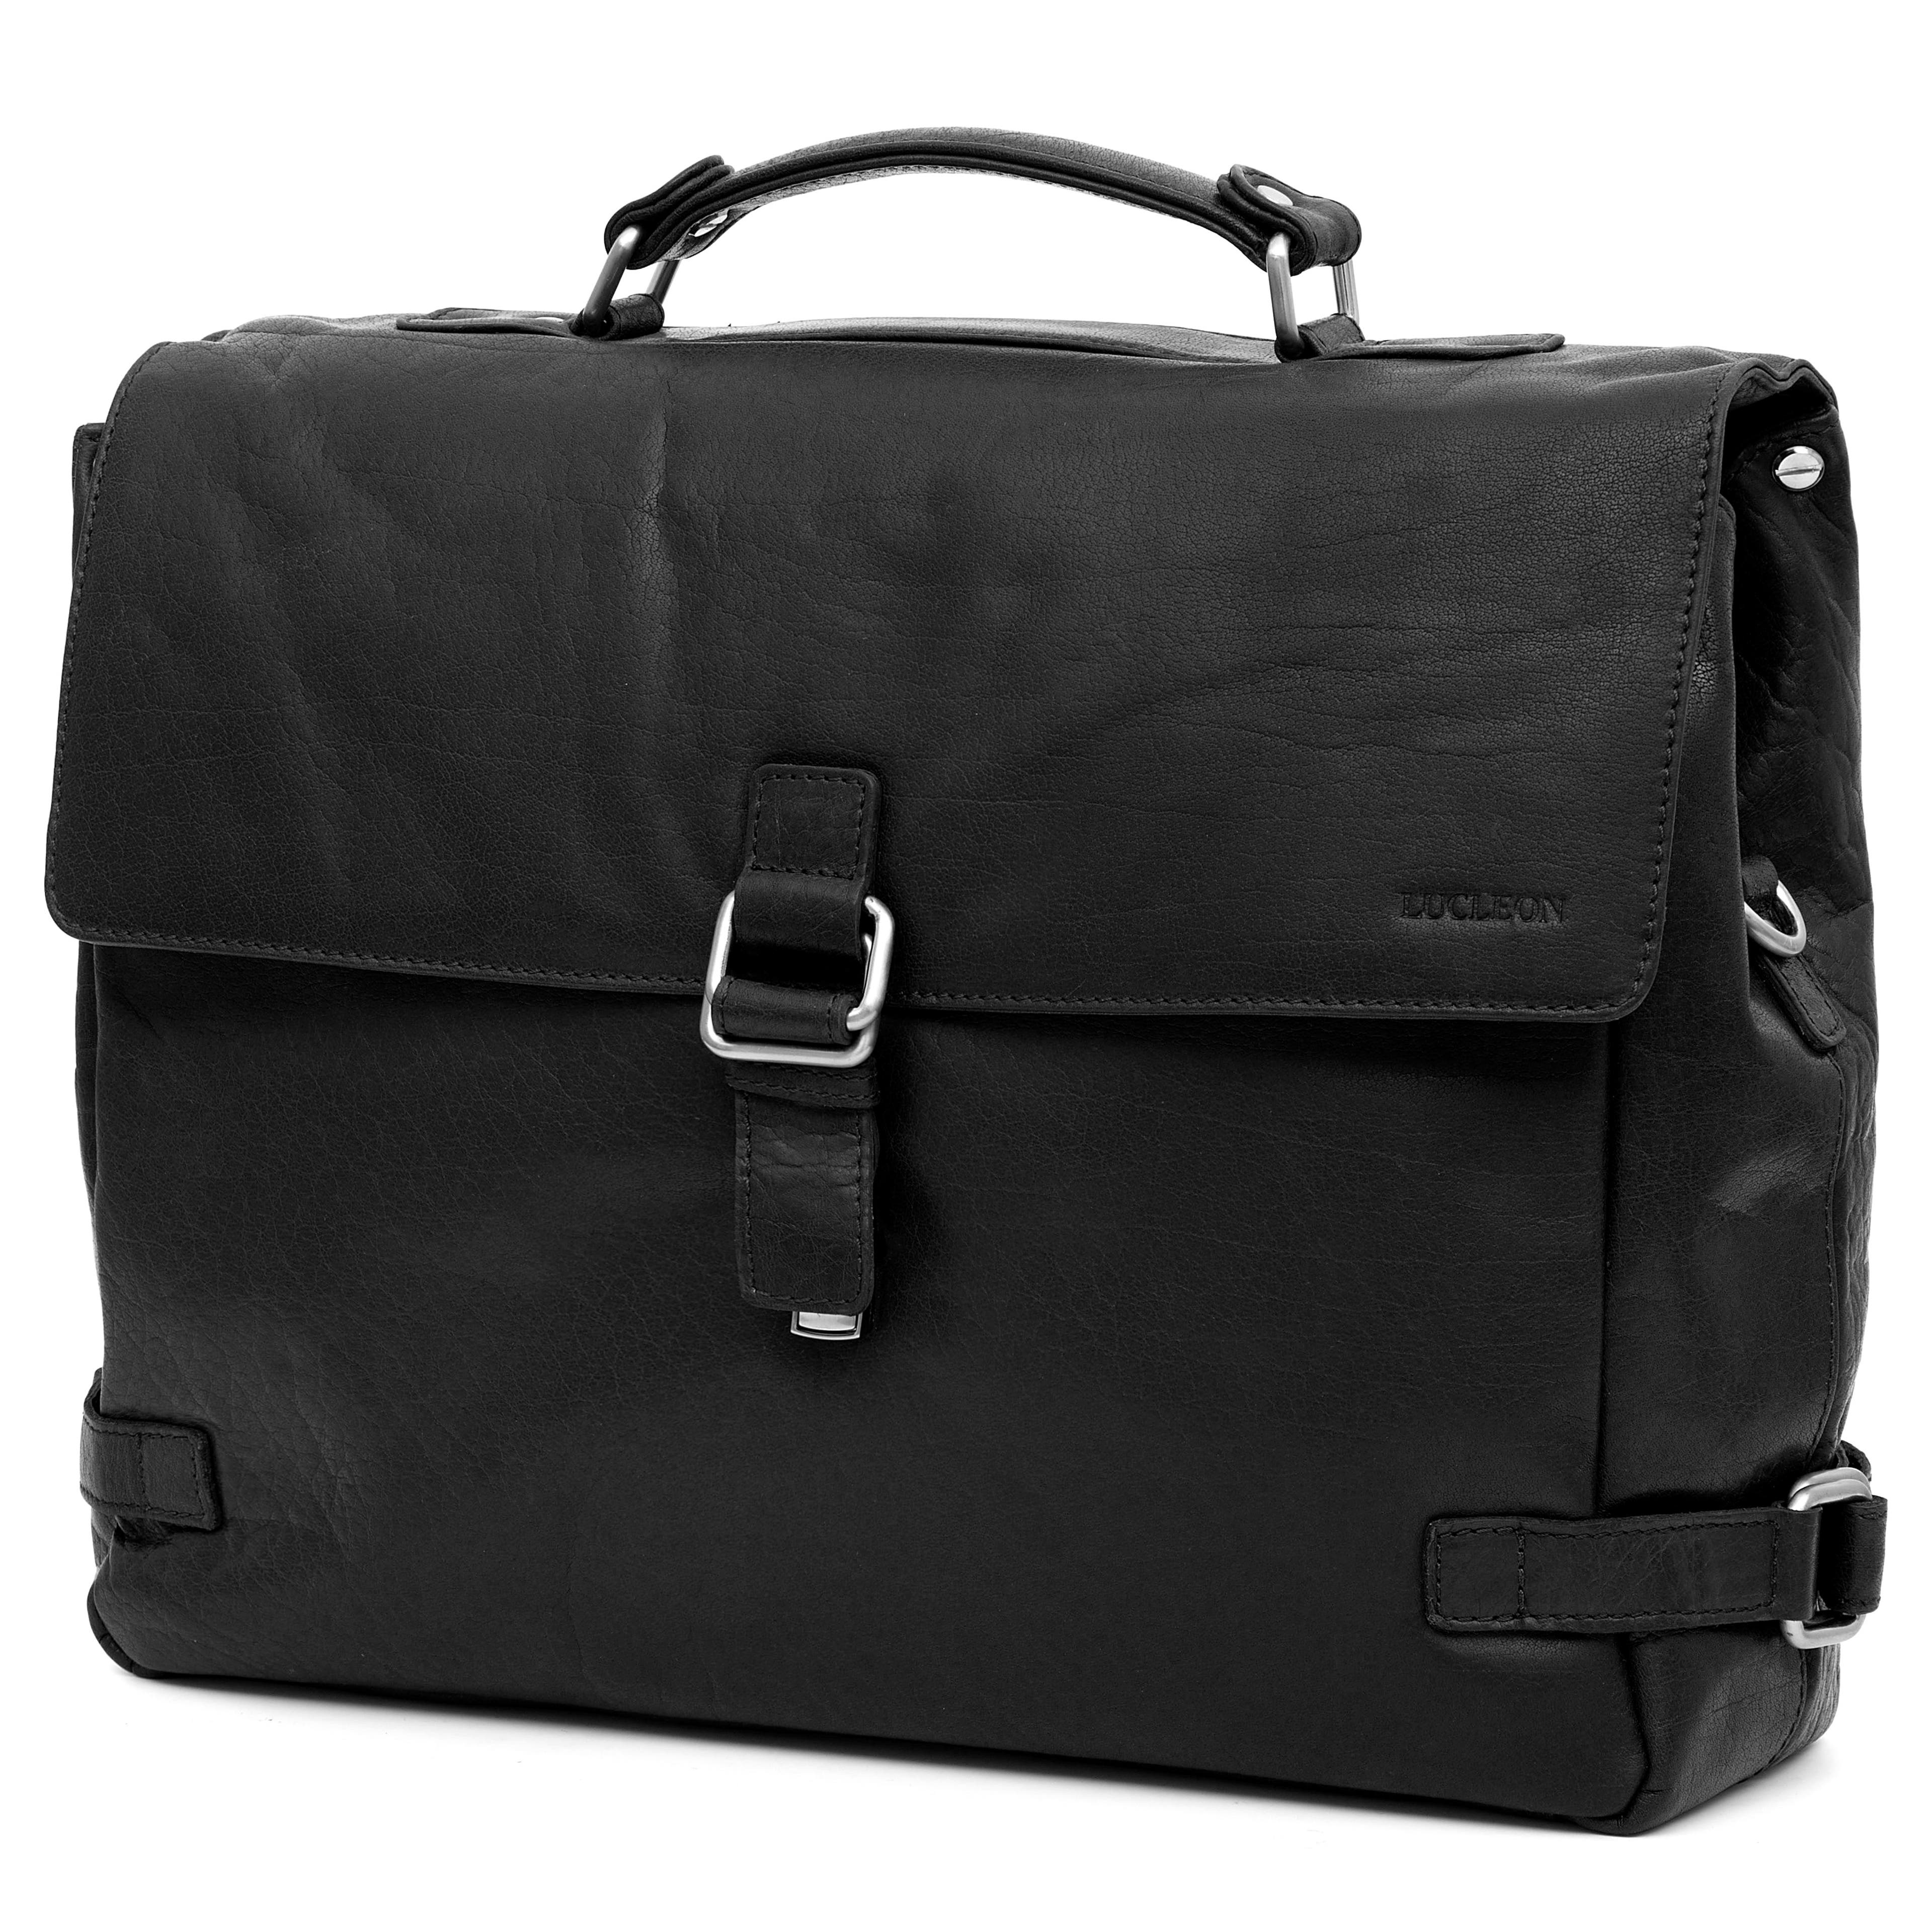 Montreal | Luxury Black Leather Satchel Bag